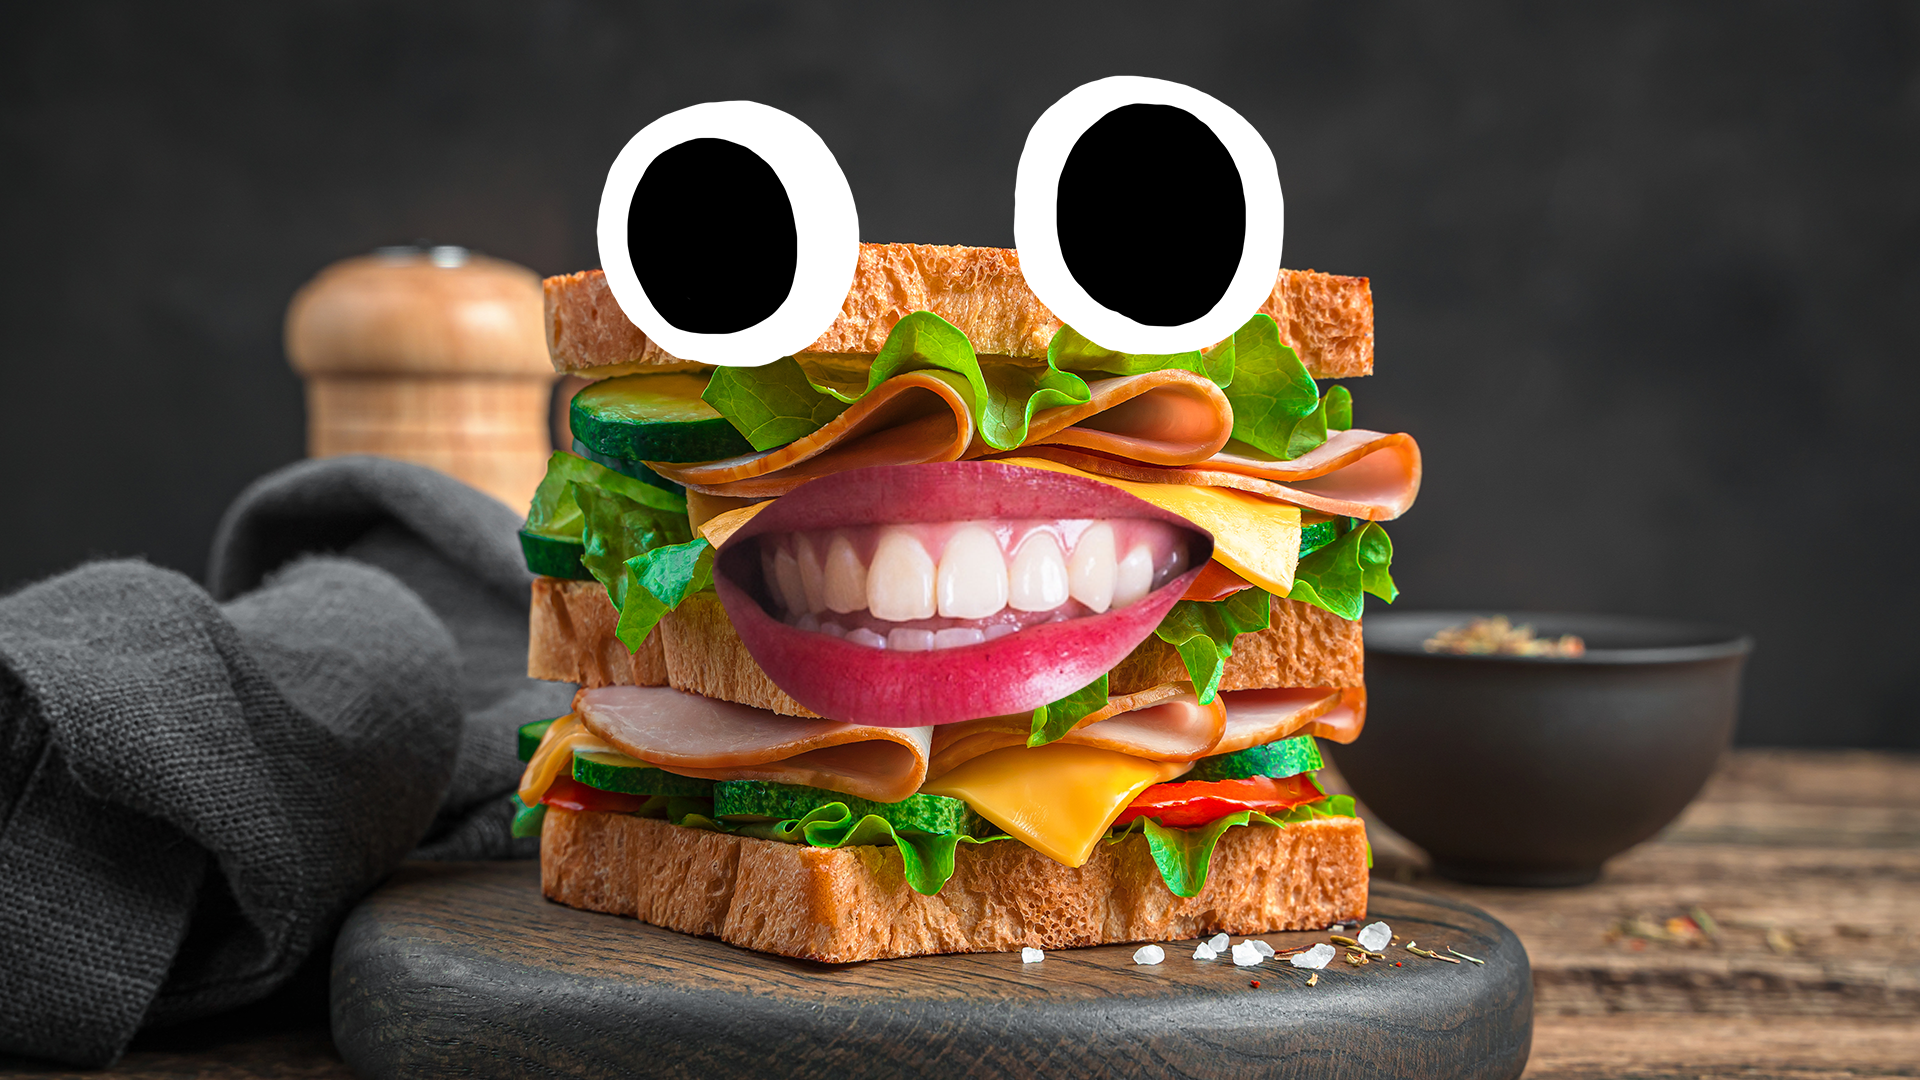 A massive sandwich